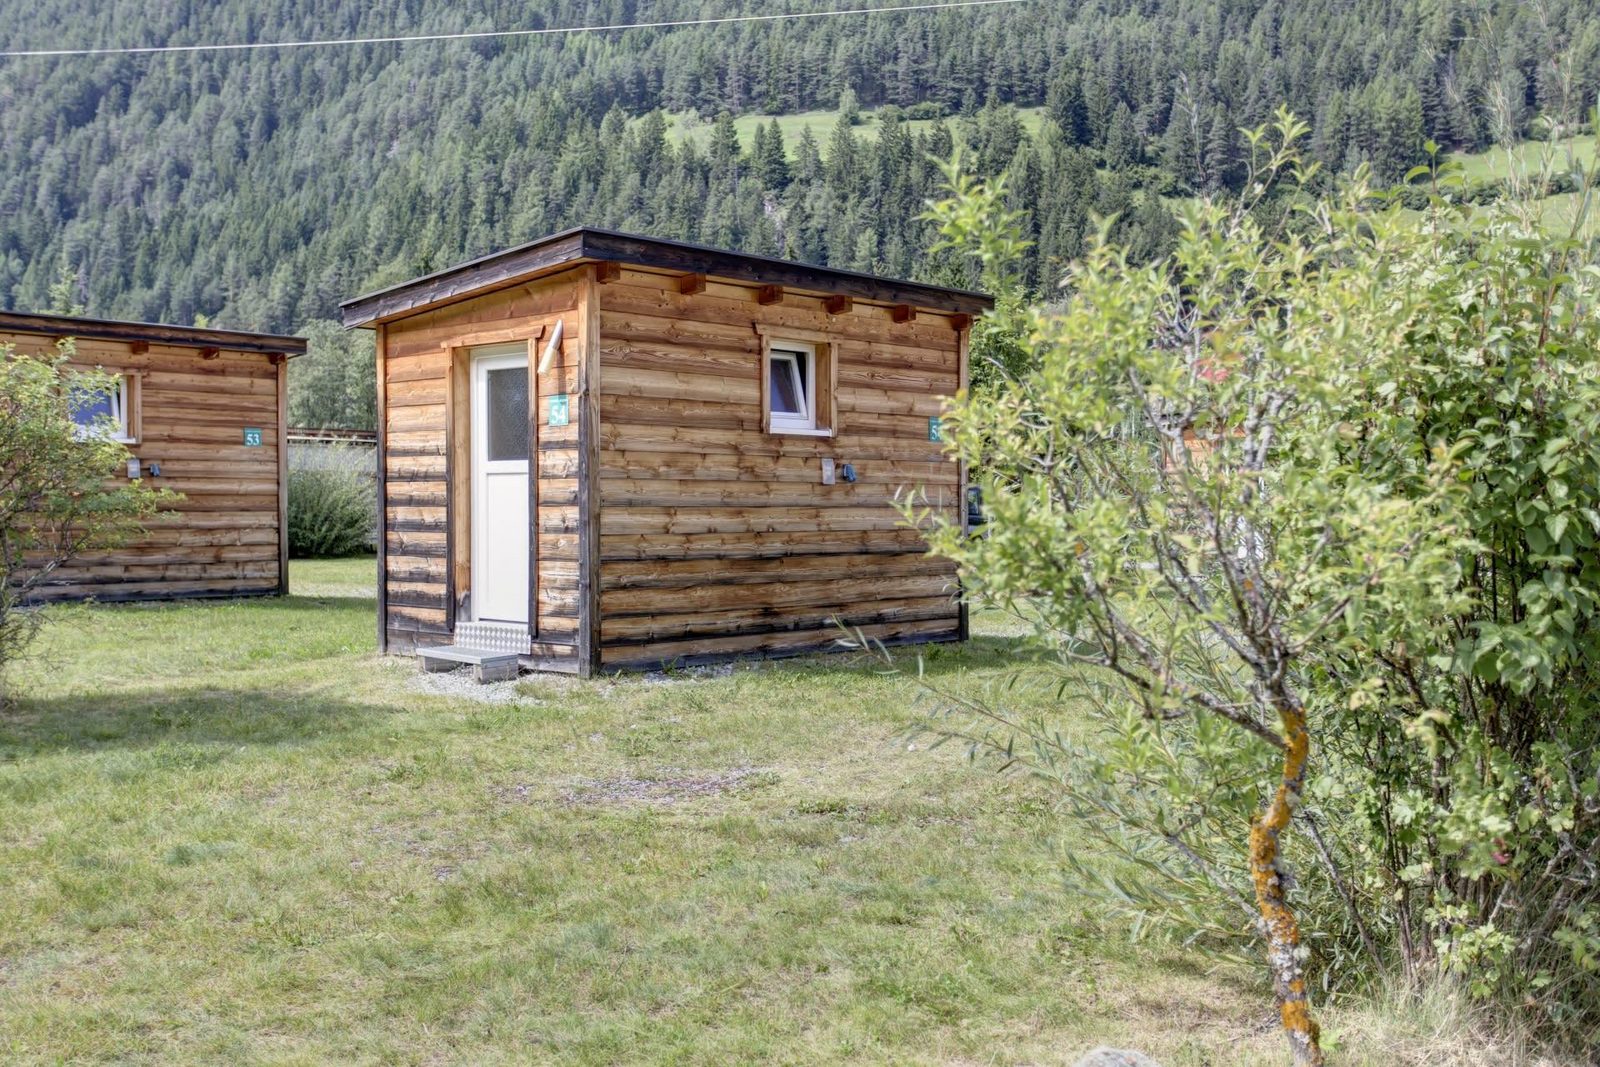 Camping pitch Arlberg (incl. private sanitary facilities)